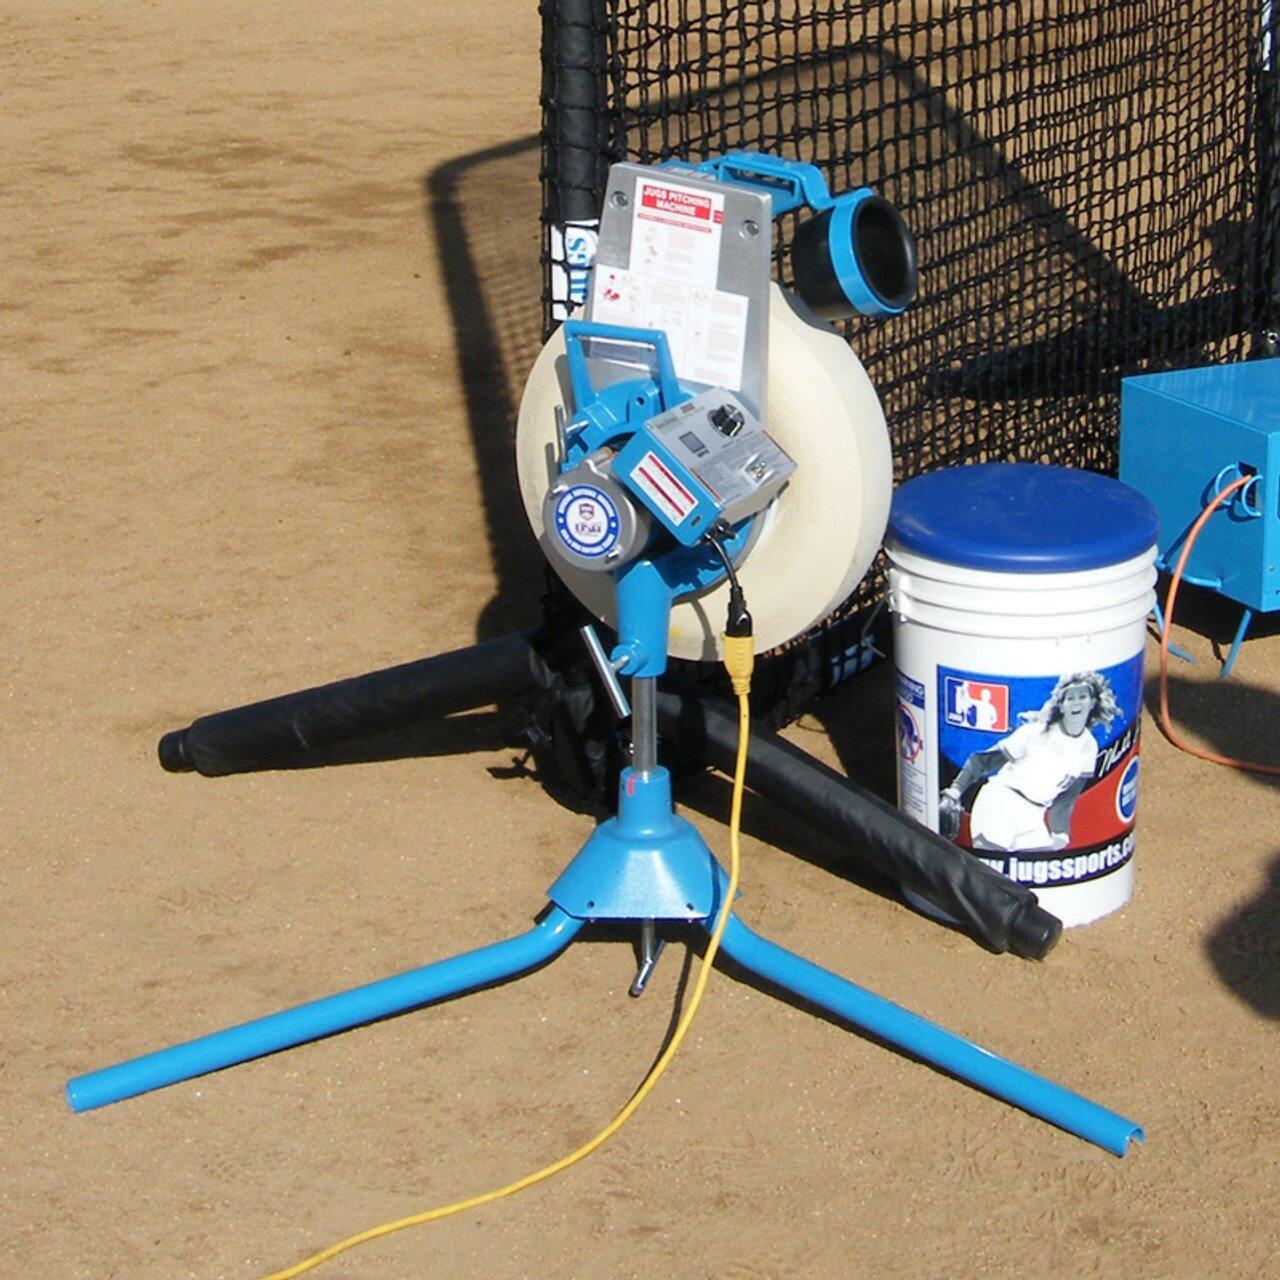 Jugs BP1 Softball Machine on field